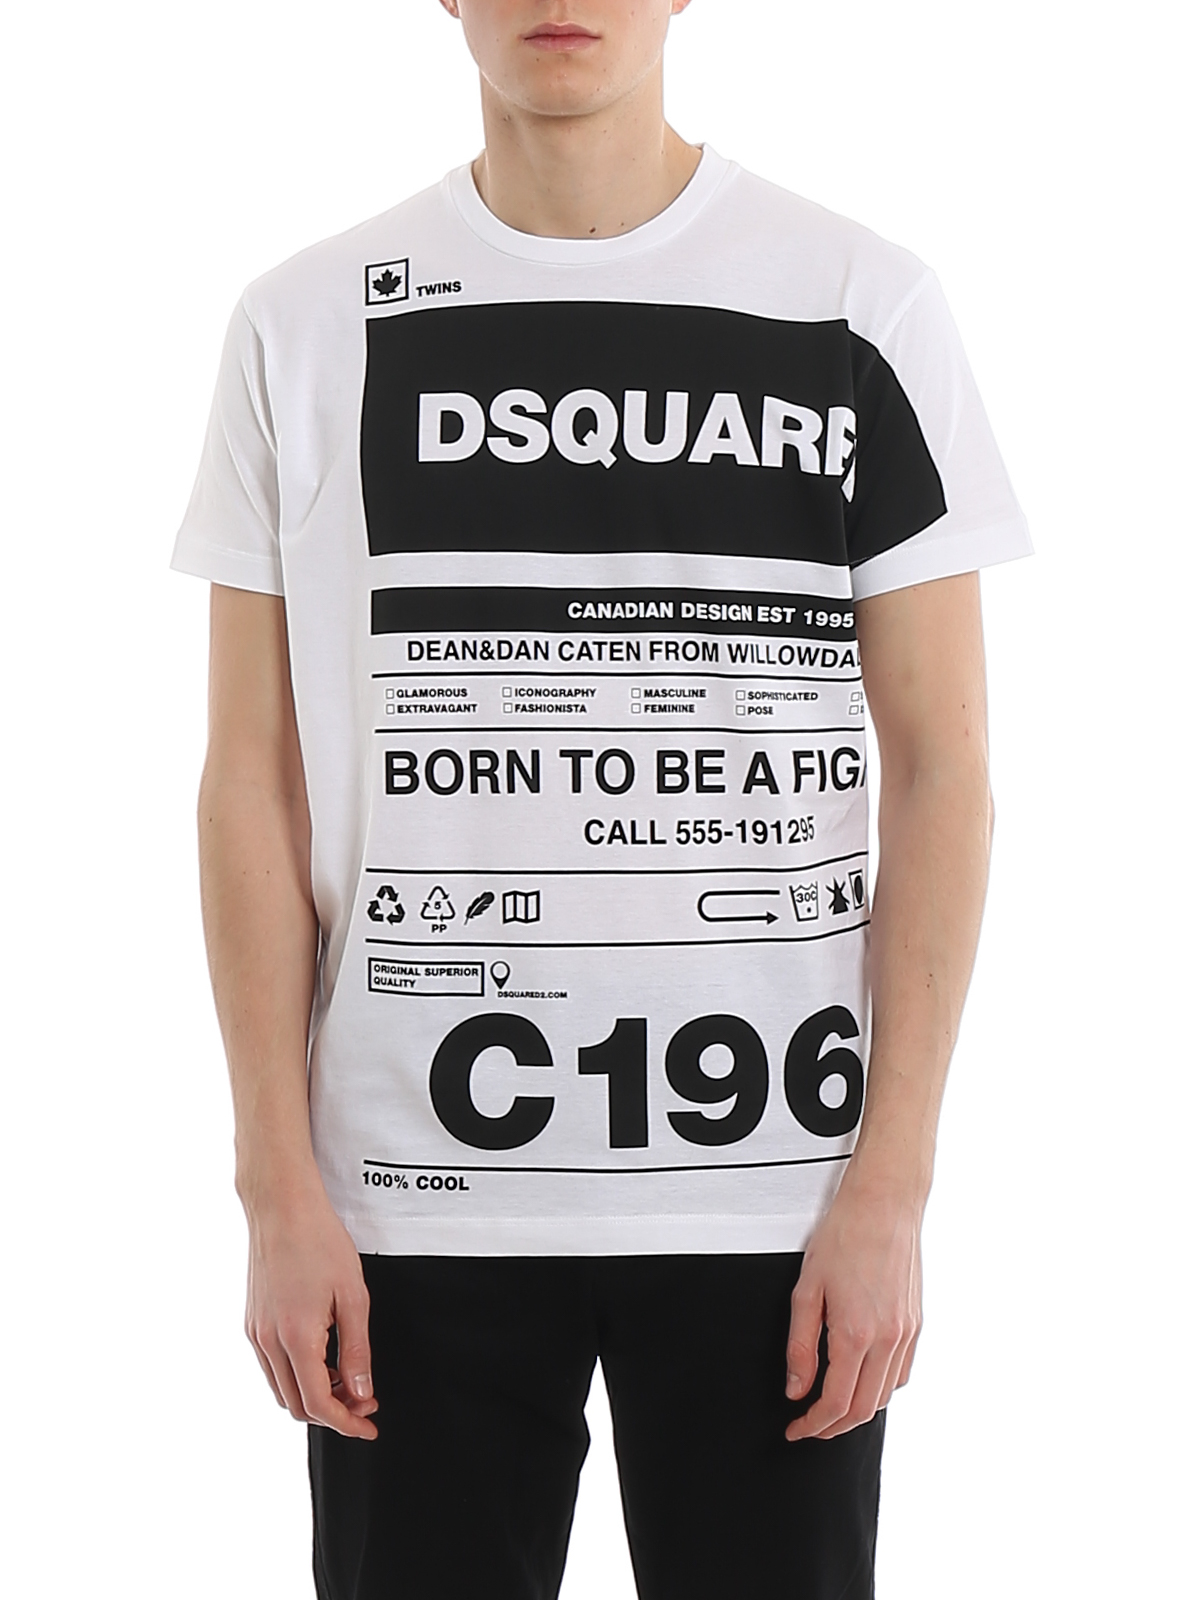 Tシャツ Dsquared2 - Tシャツ - 白 - S74GD0697S22427100 | iKRIX.com